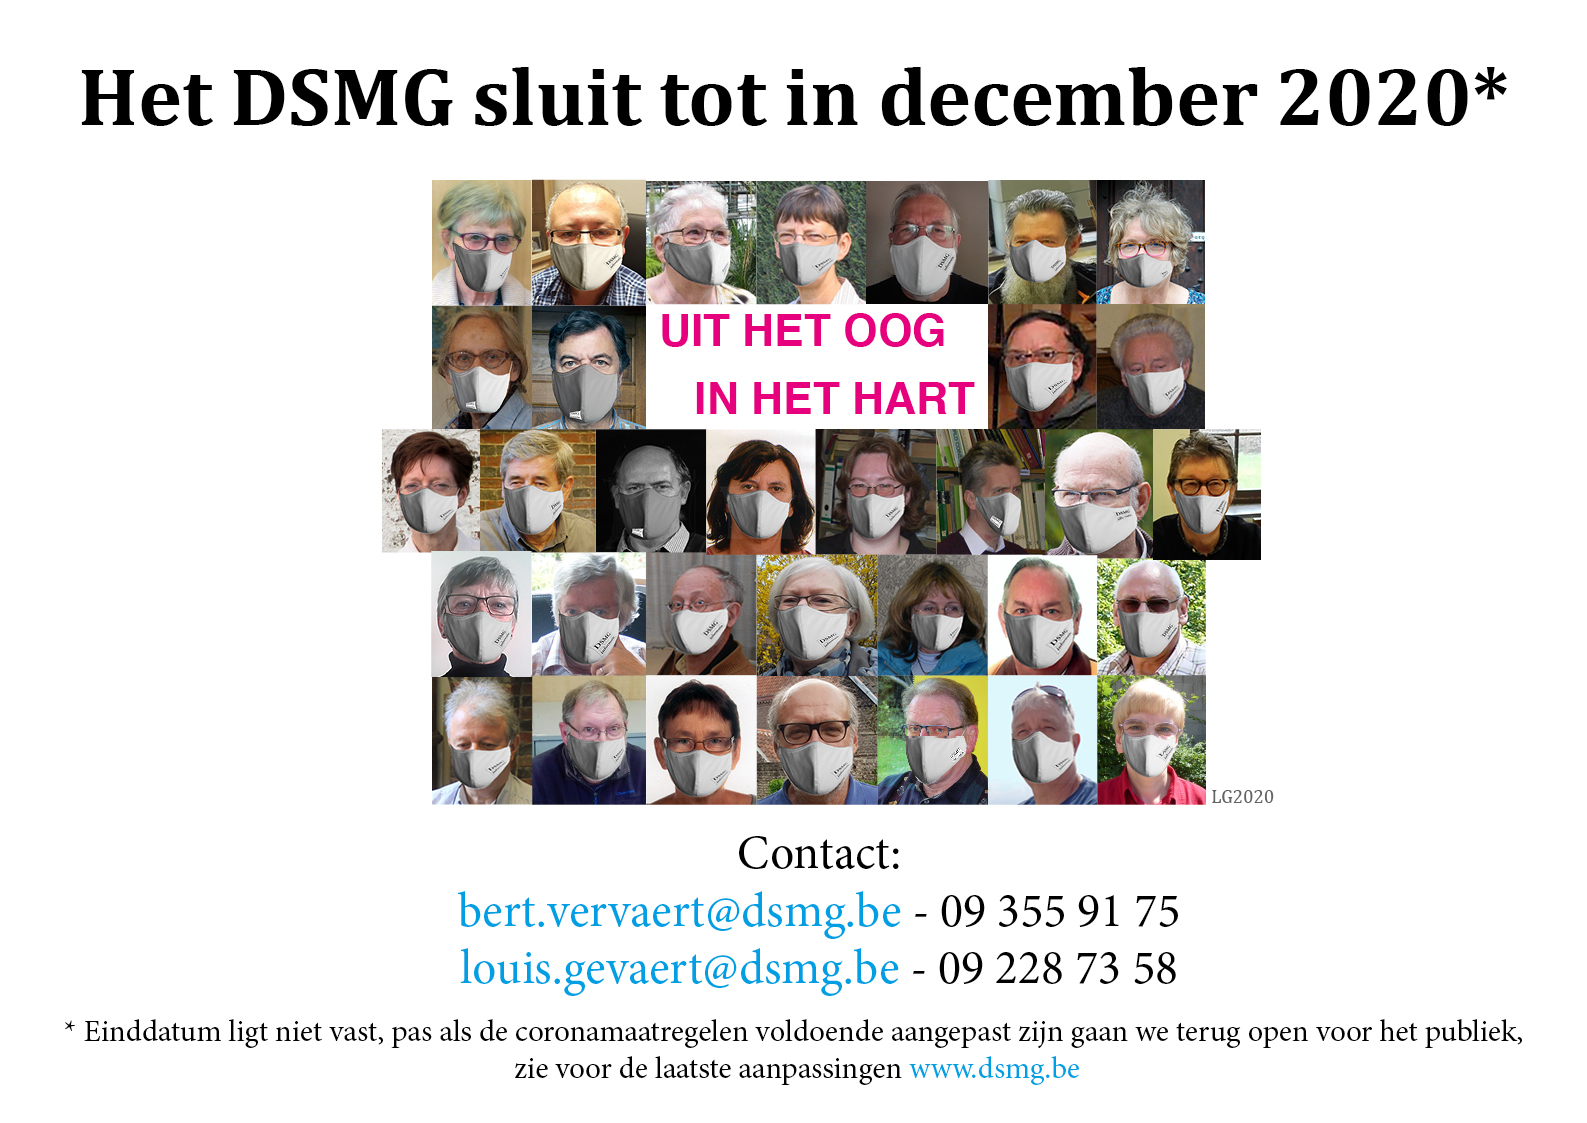 DSMG sluit tot in december 2020